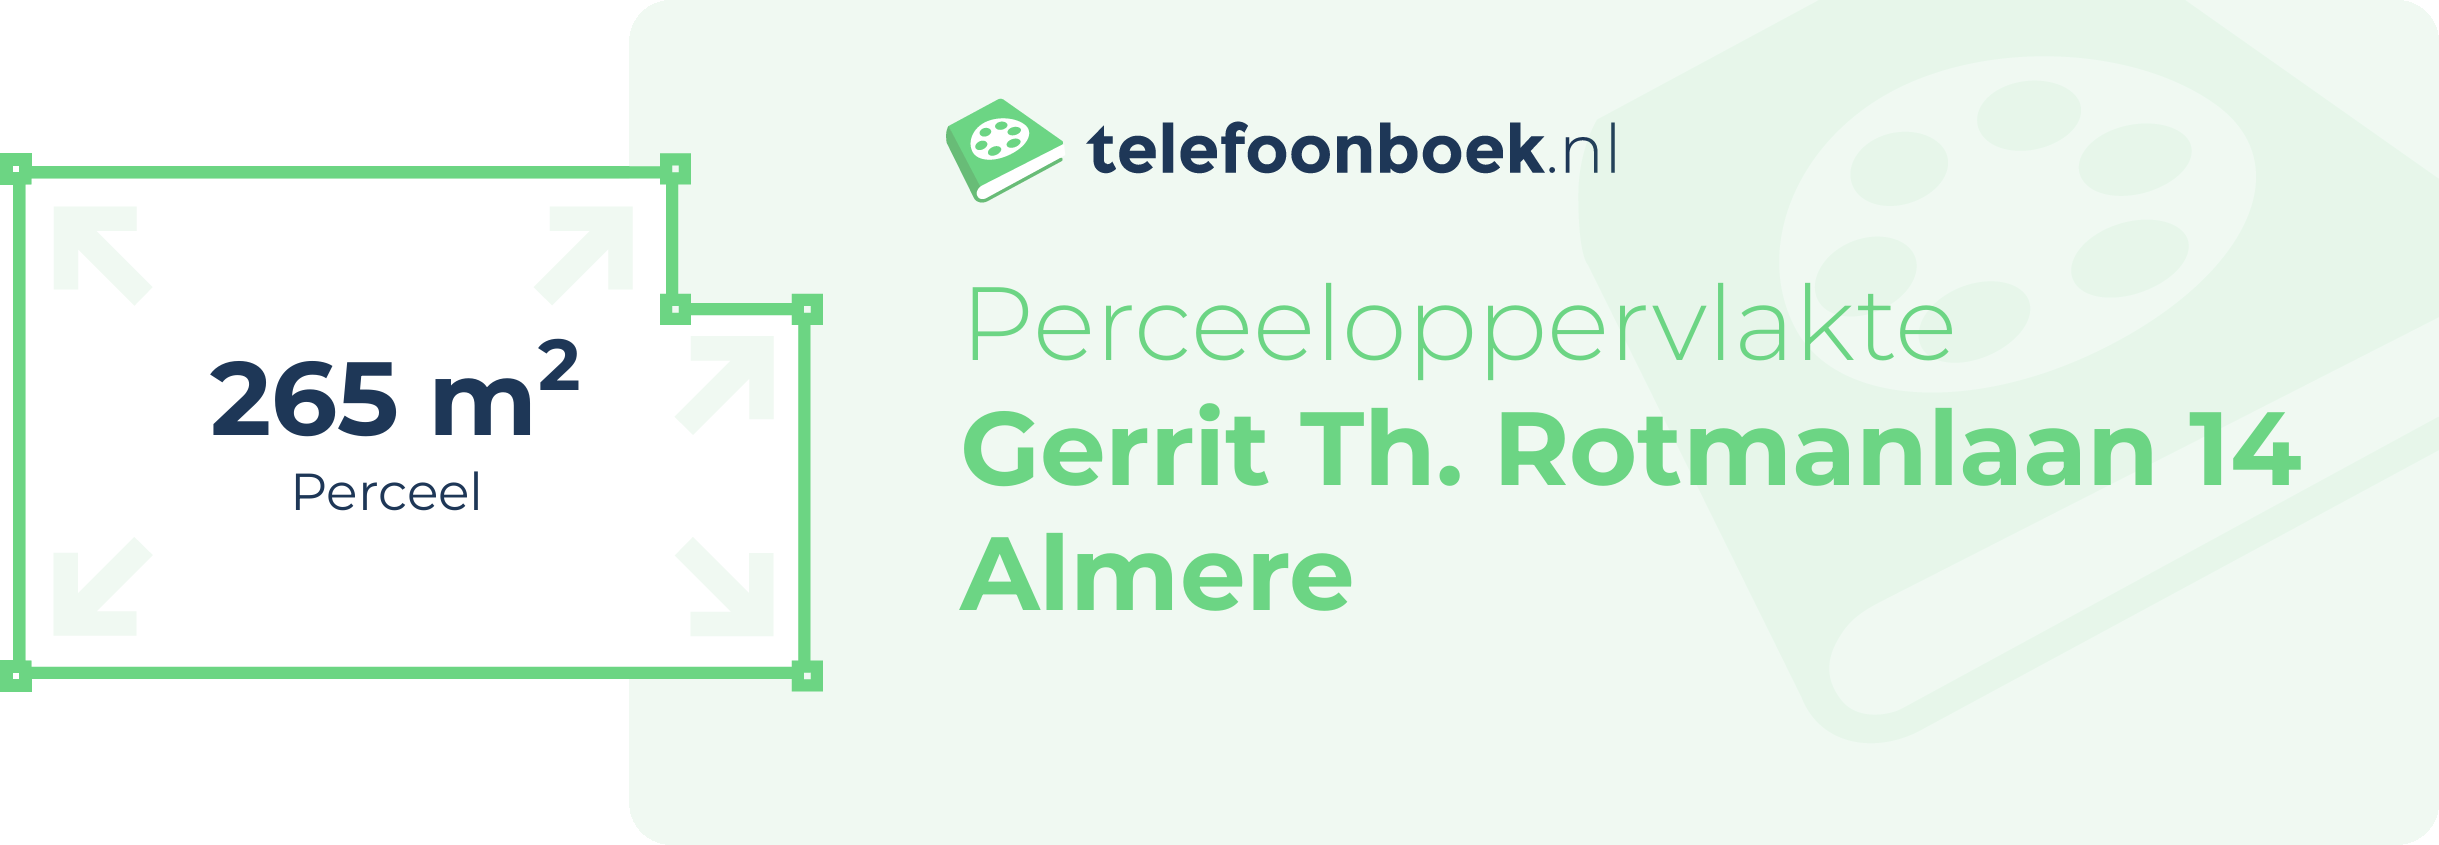 Perceeloppervlakte Gerrit Th. Rotmanlaan 14 Almere